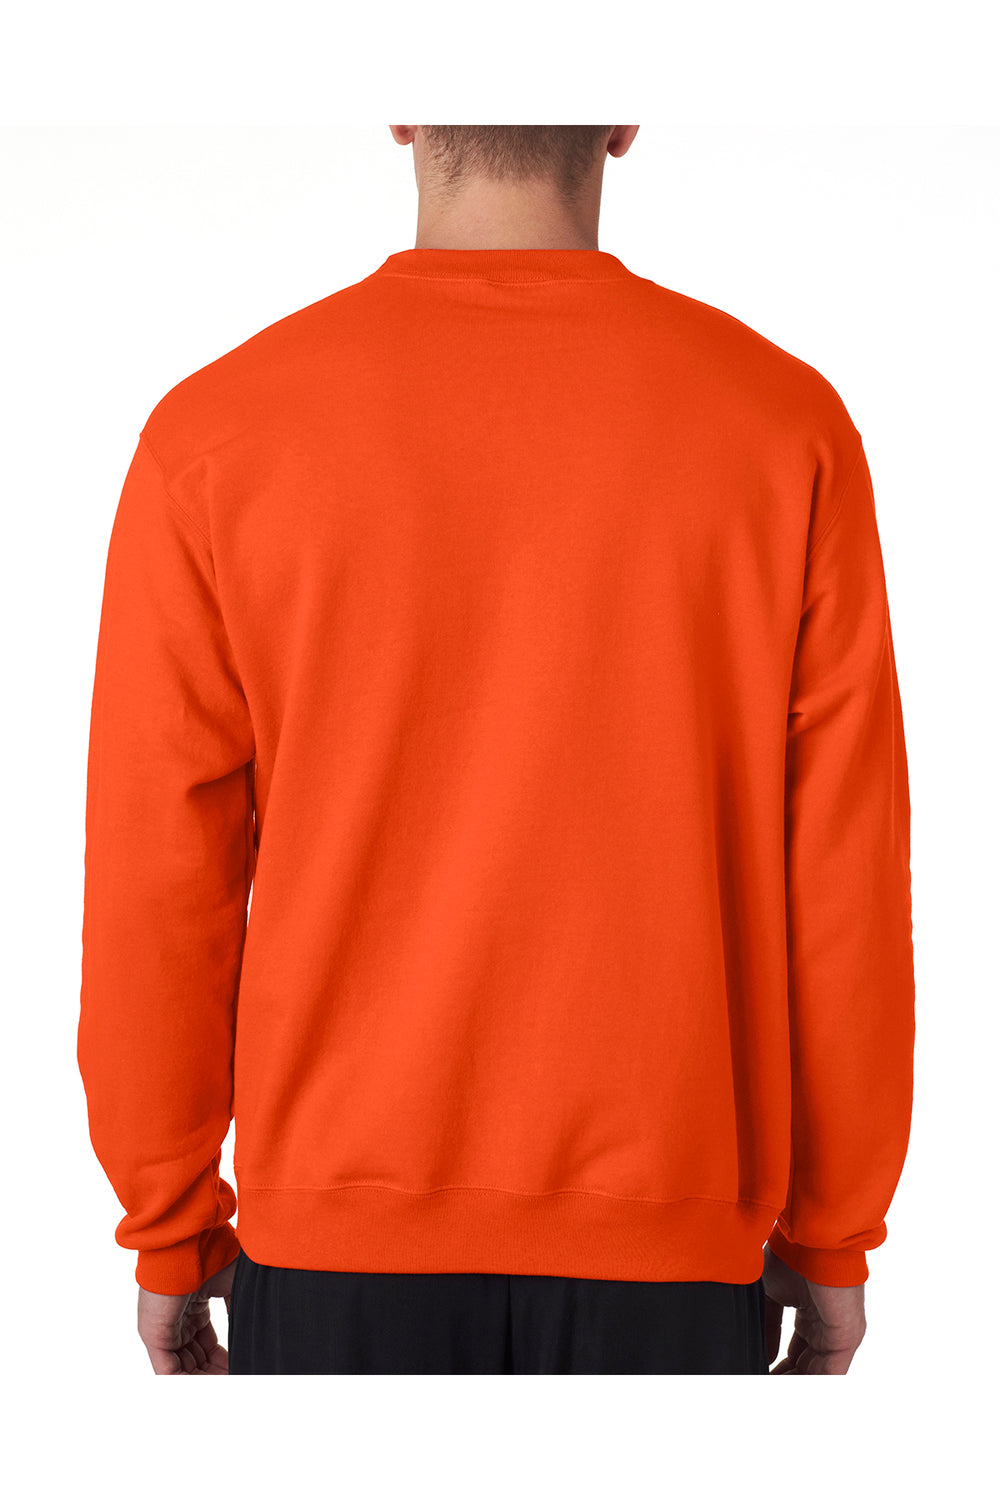 Champion S600 Mens Double Dry Eco Moisture Wicking Fleece Crewneck Sweatshirt Orange Back